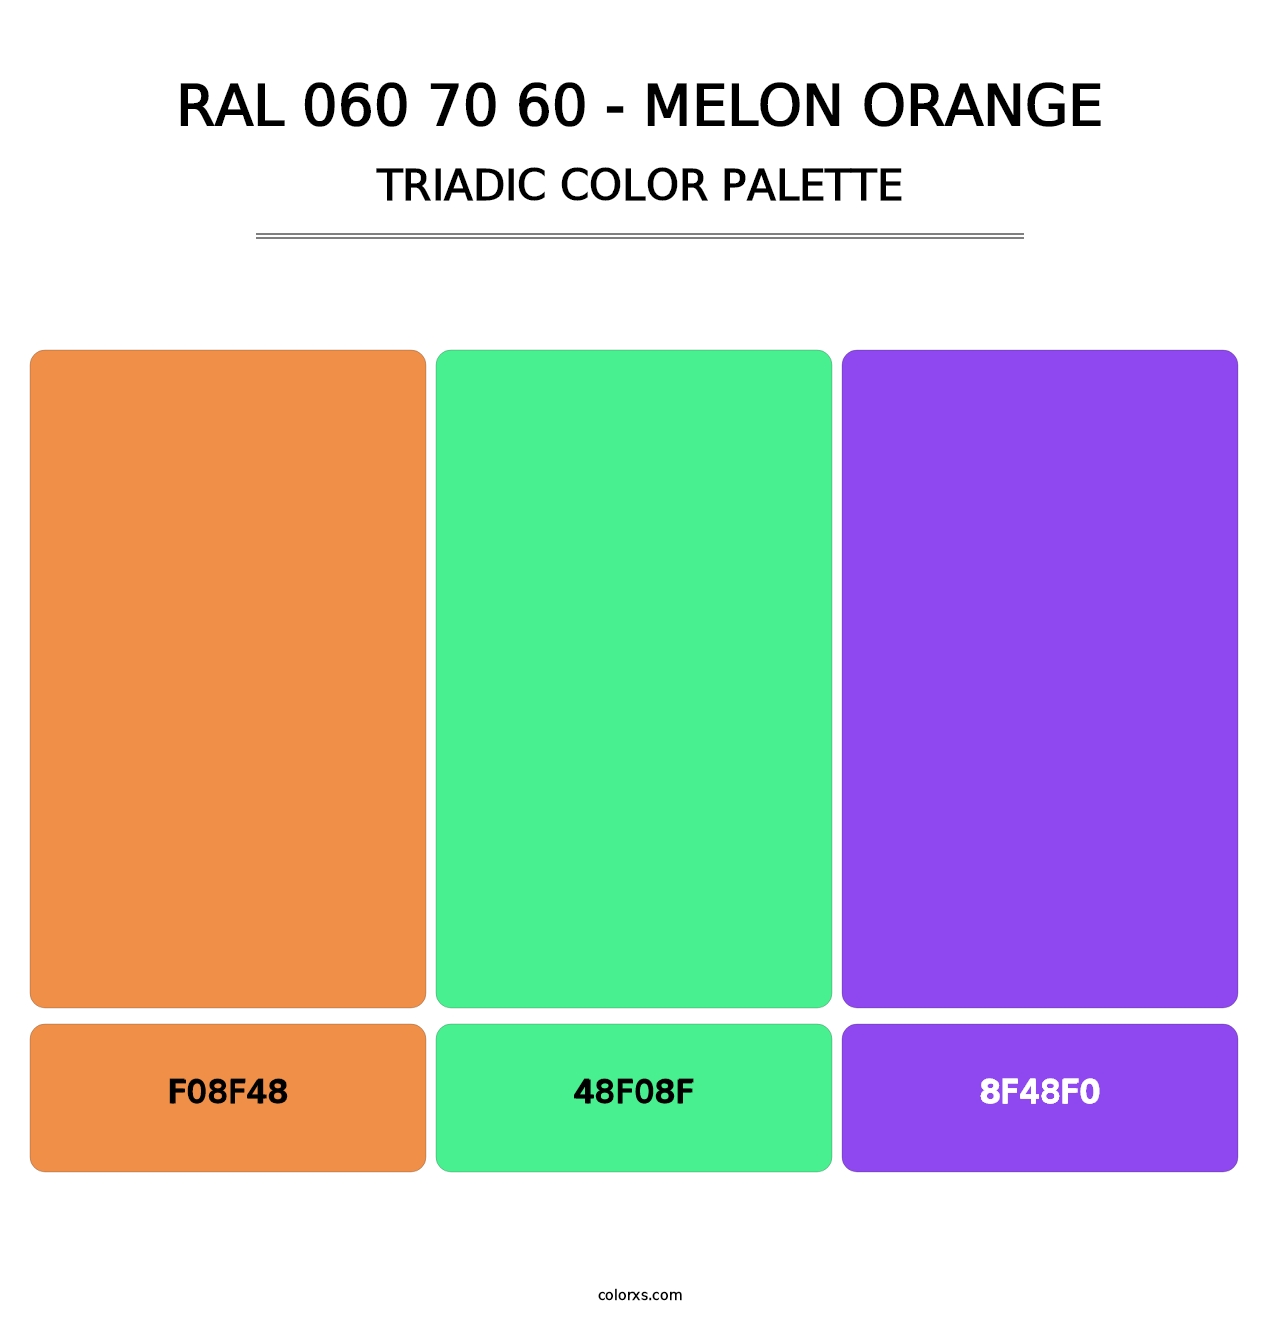 RAL 060 70 60 - Melon Orange - Triadic Color Palette